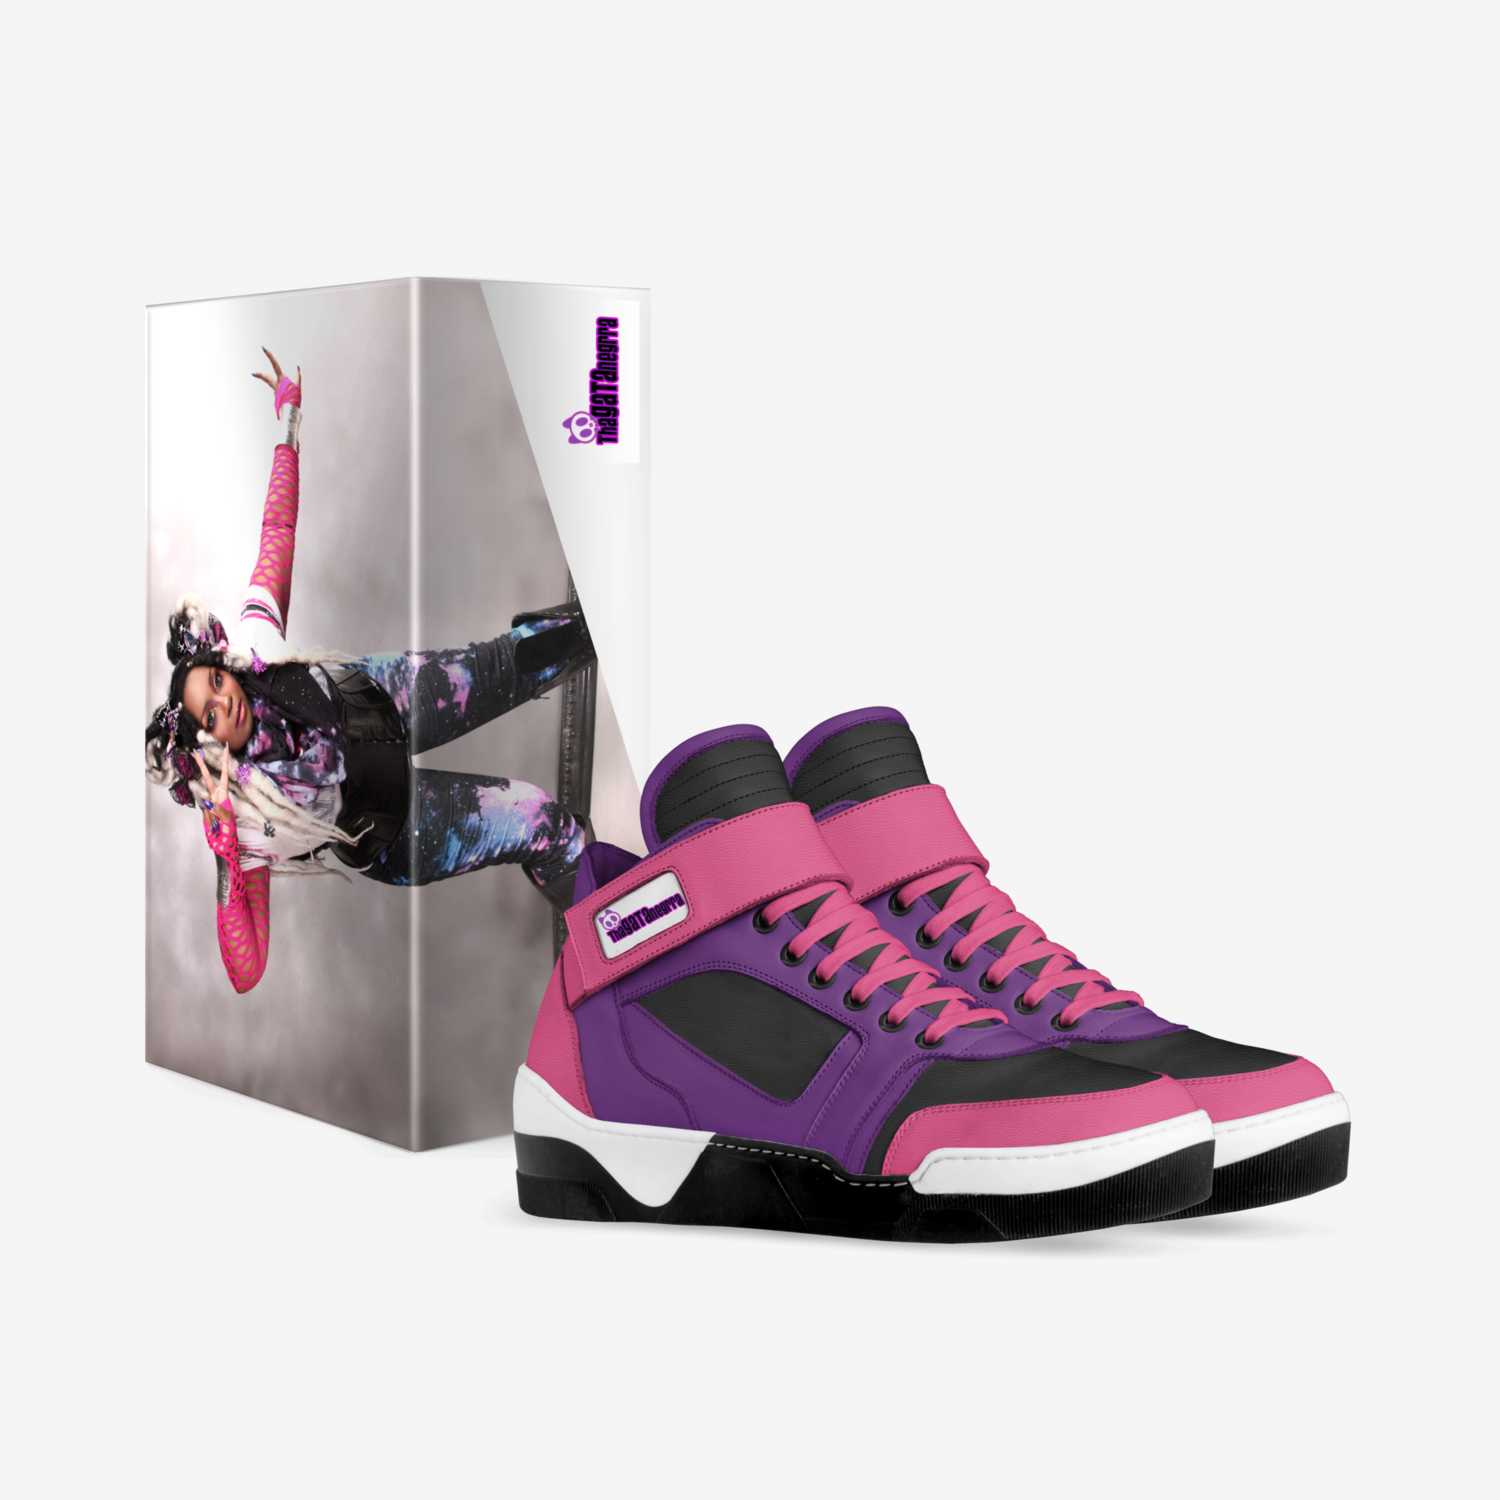 Goro Goro Kei custom made in Italy shoes by Tha Gata Negrra | Box view